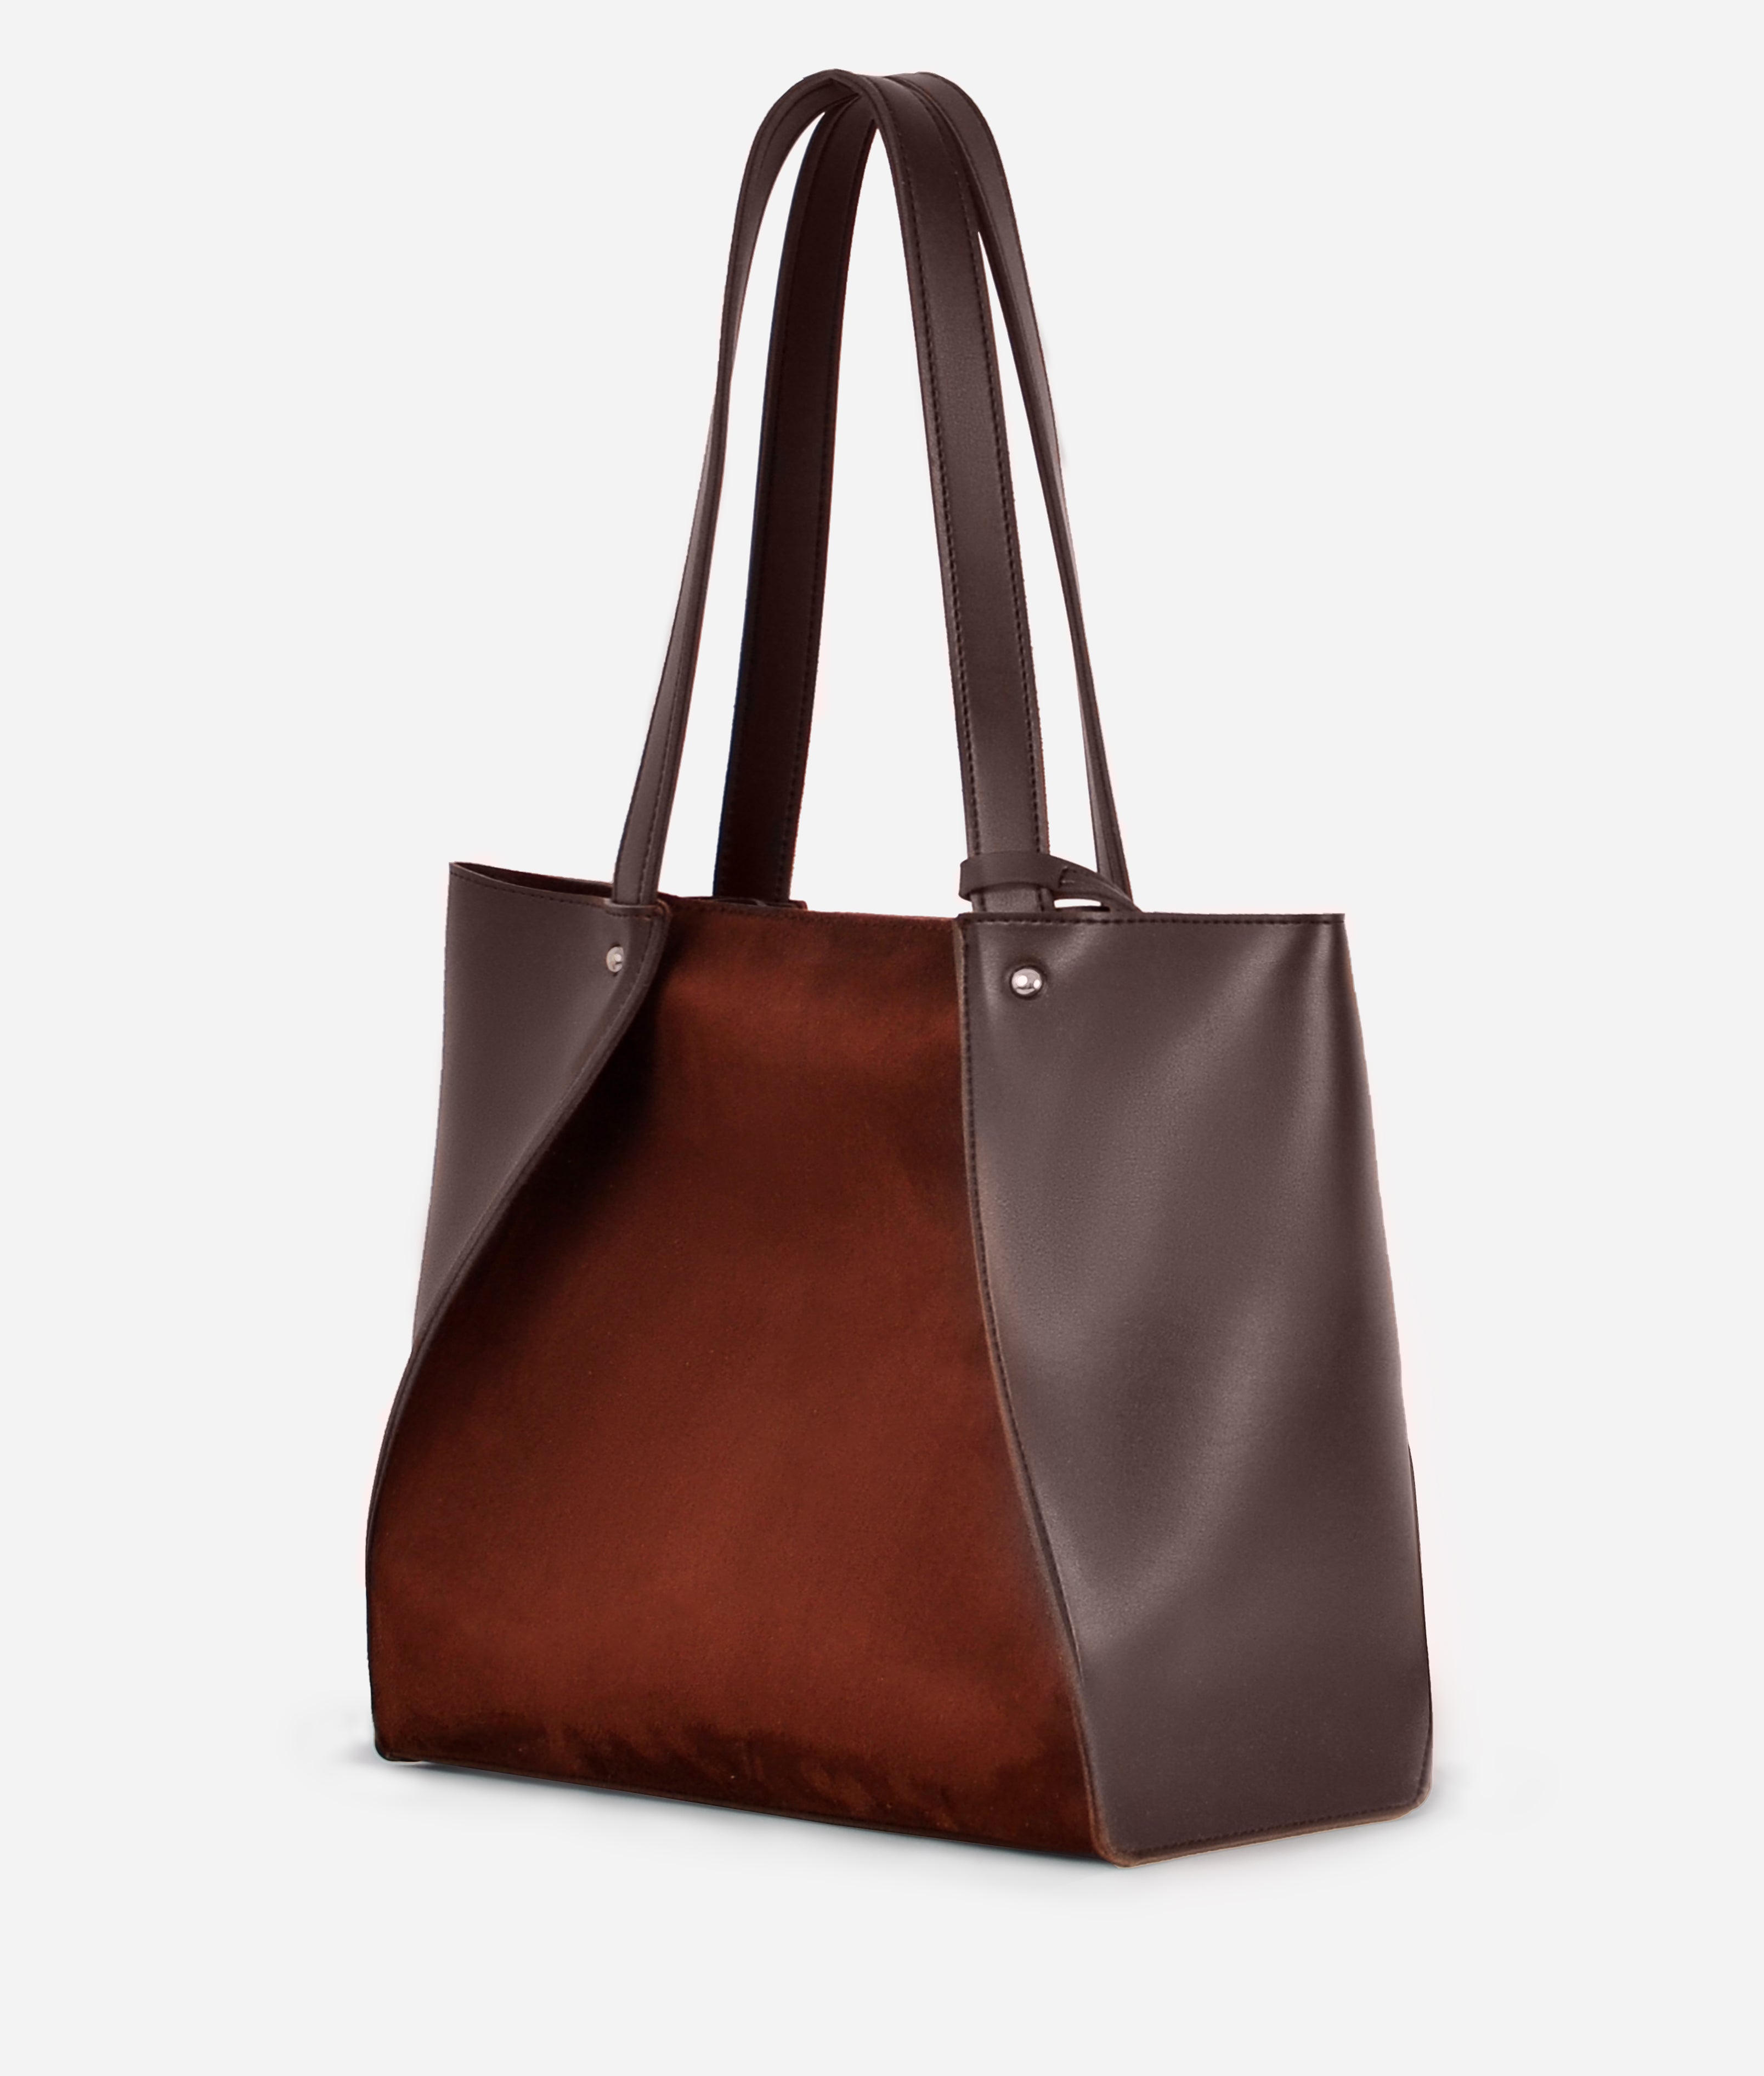 Dark brown suede shopping tote bag